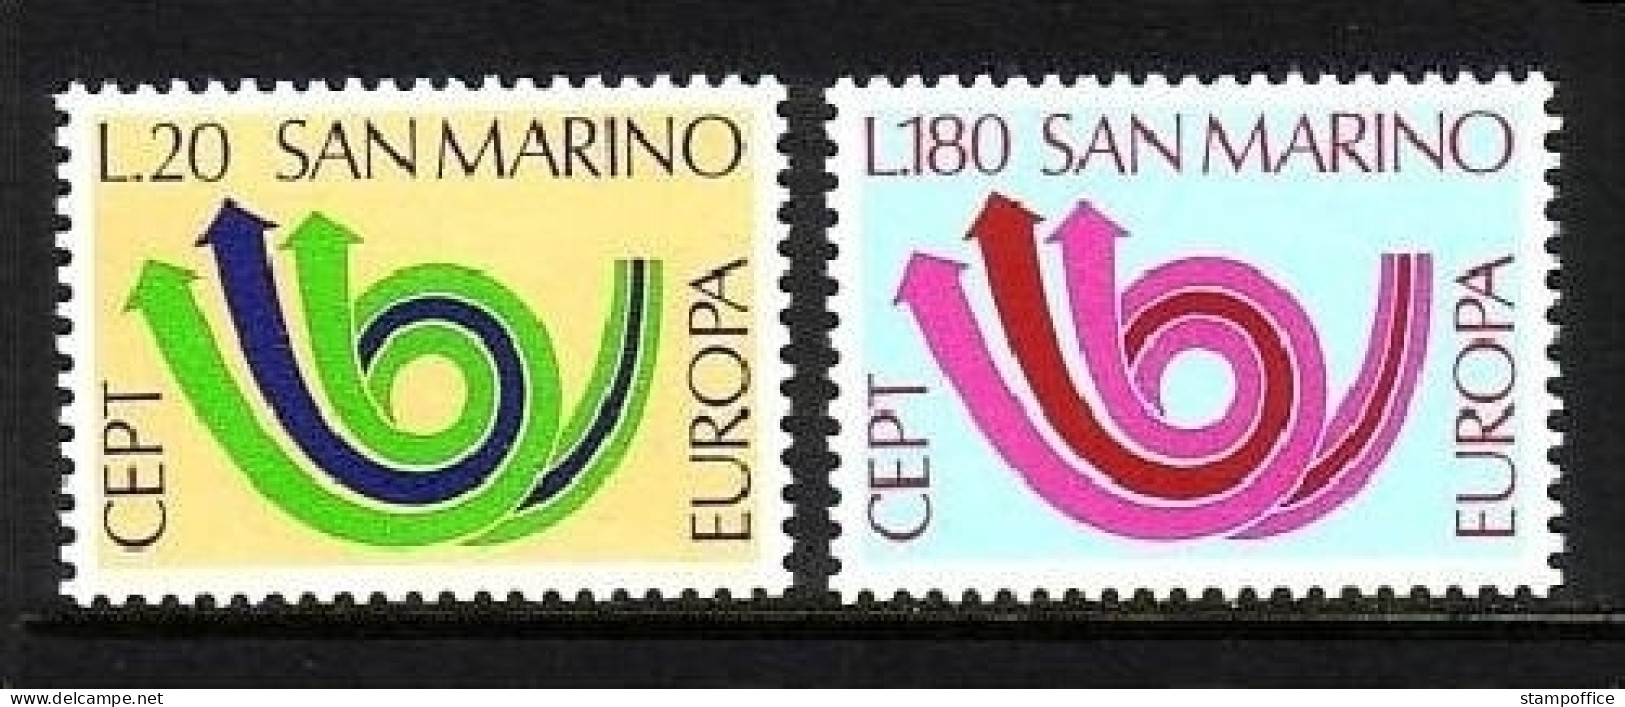 SAN MARINO MI-NR. 1029-1030 POSTFRISCH(MINT) EUROPA 1973 POSTHORN - 1973